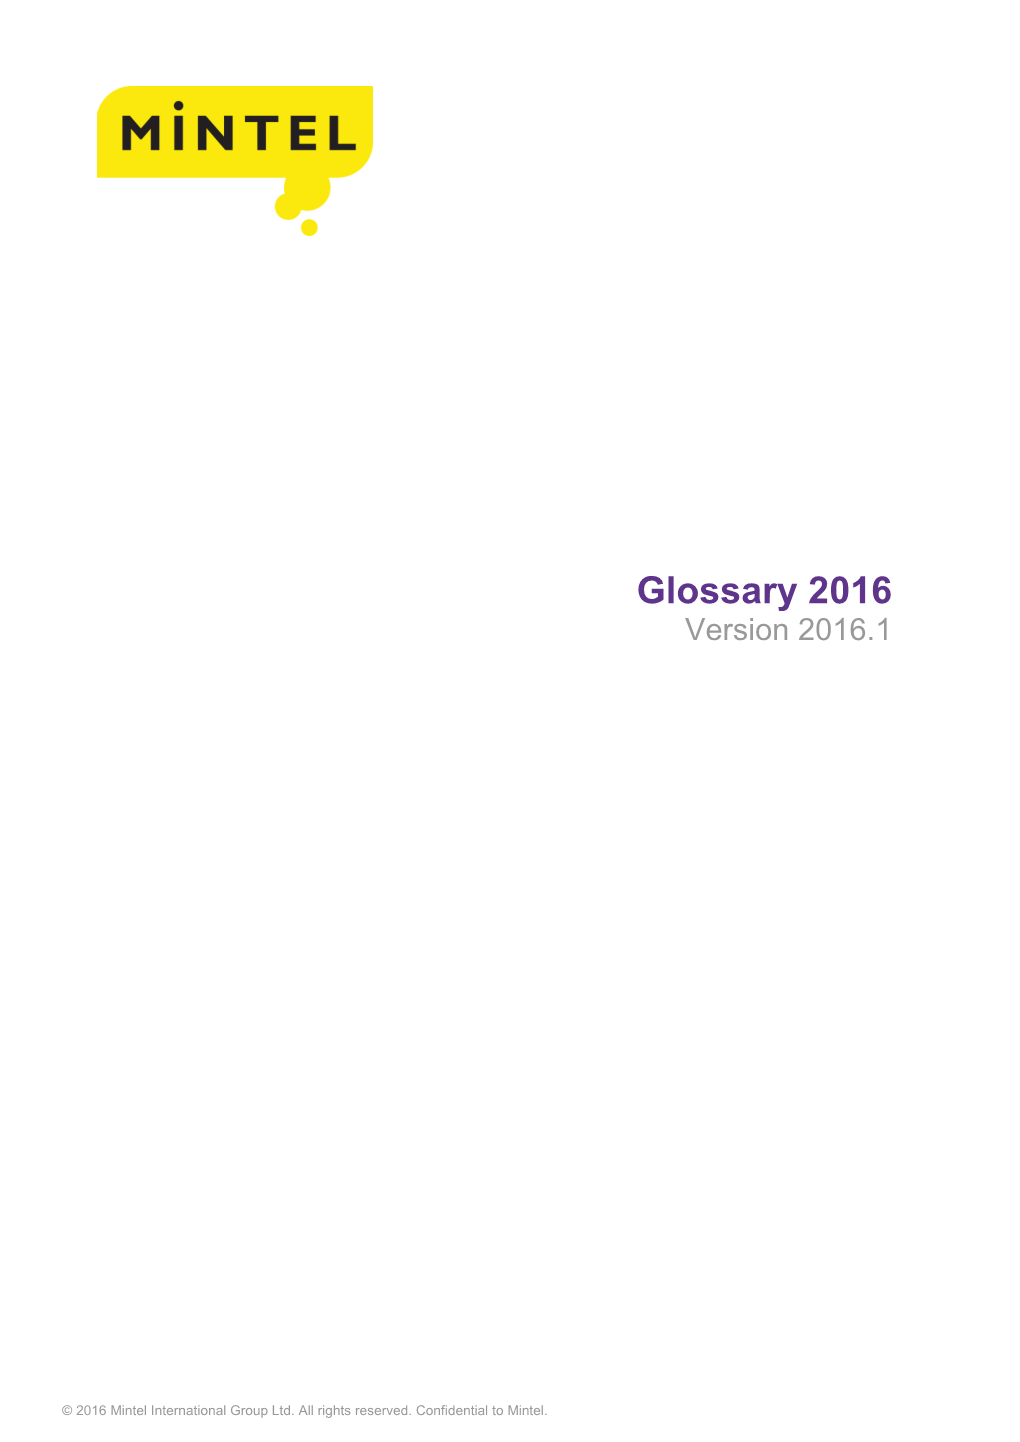 Glossary 2016 Version 2016.1